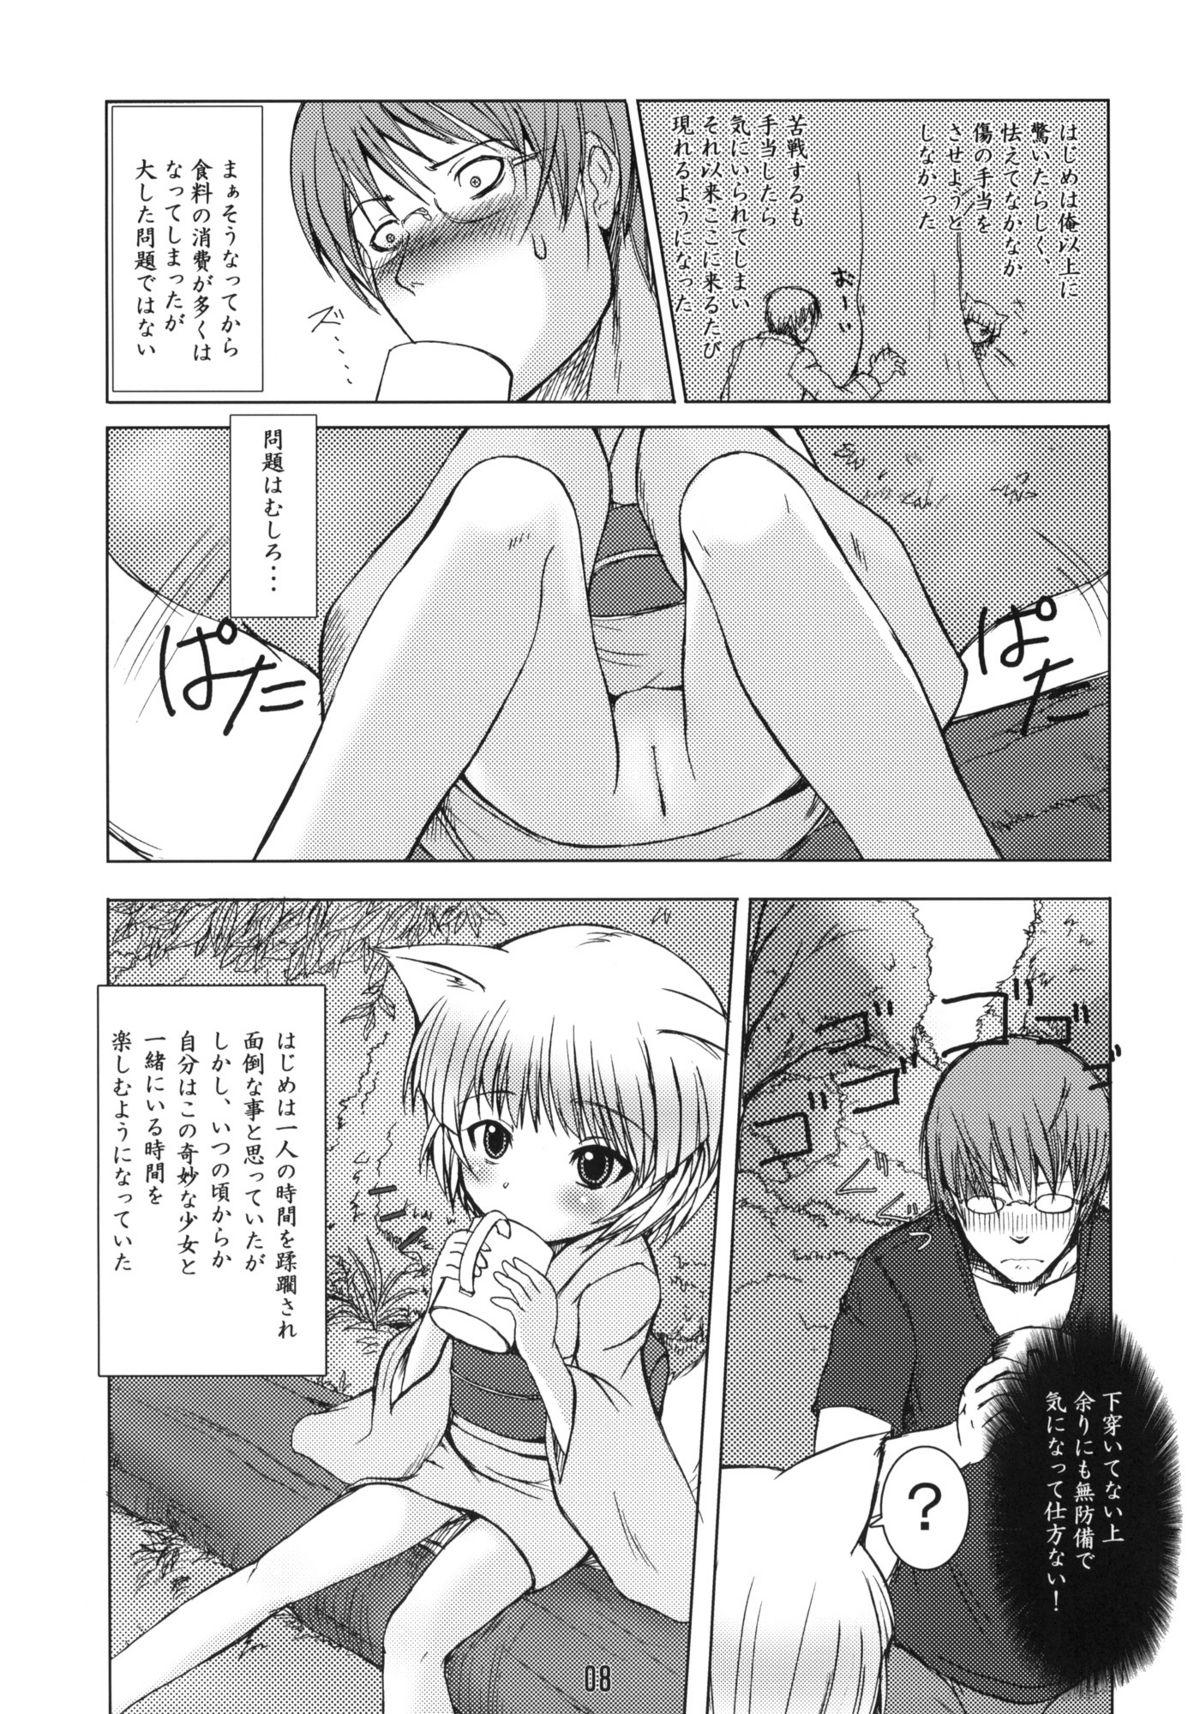 Cartoon Byakko no Mori Pov Sex - Page 7